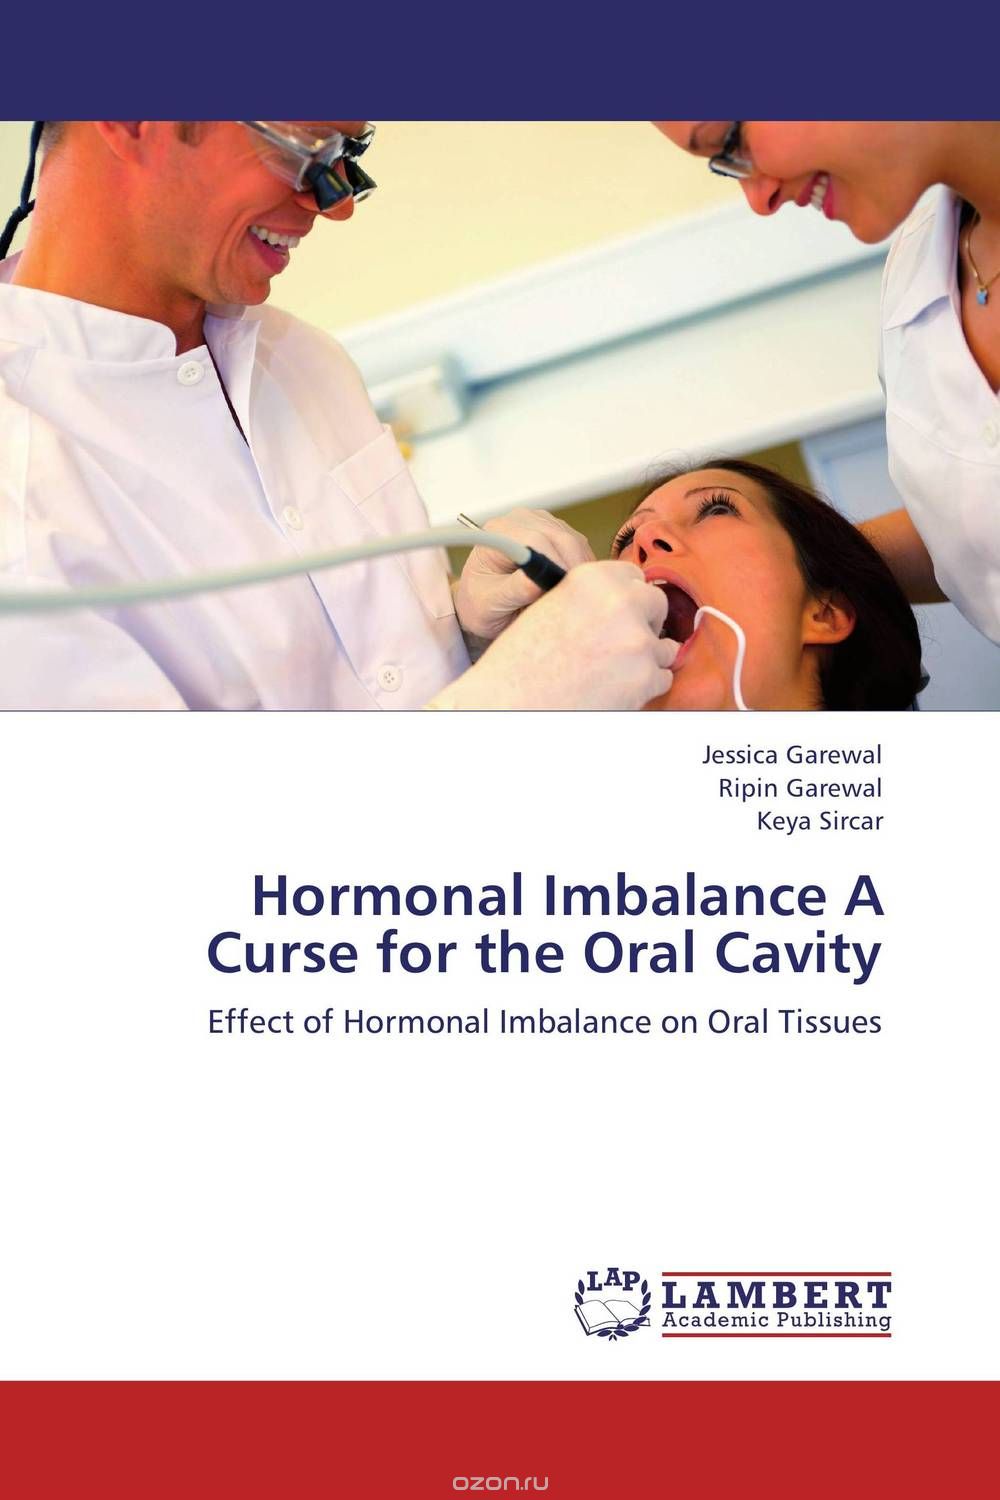 Скачать книгу "Hormonal Imbalance A Curse for the Oral Cavity"